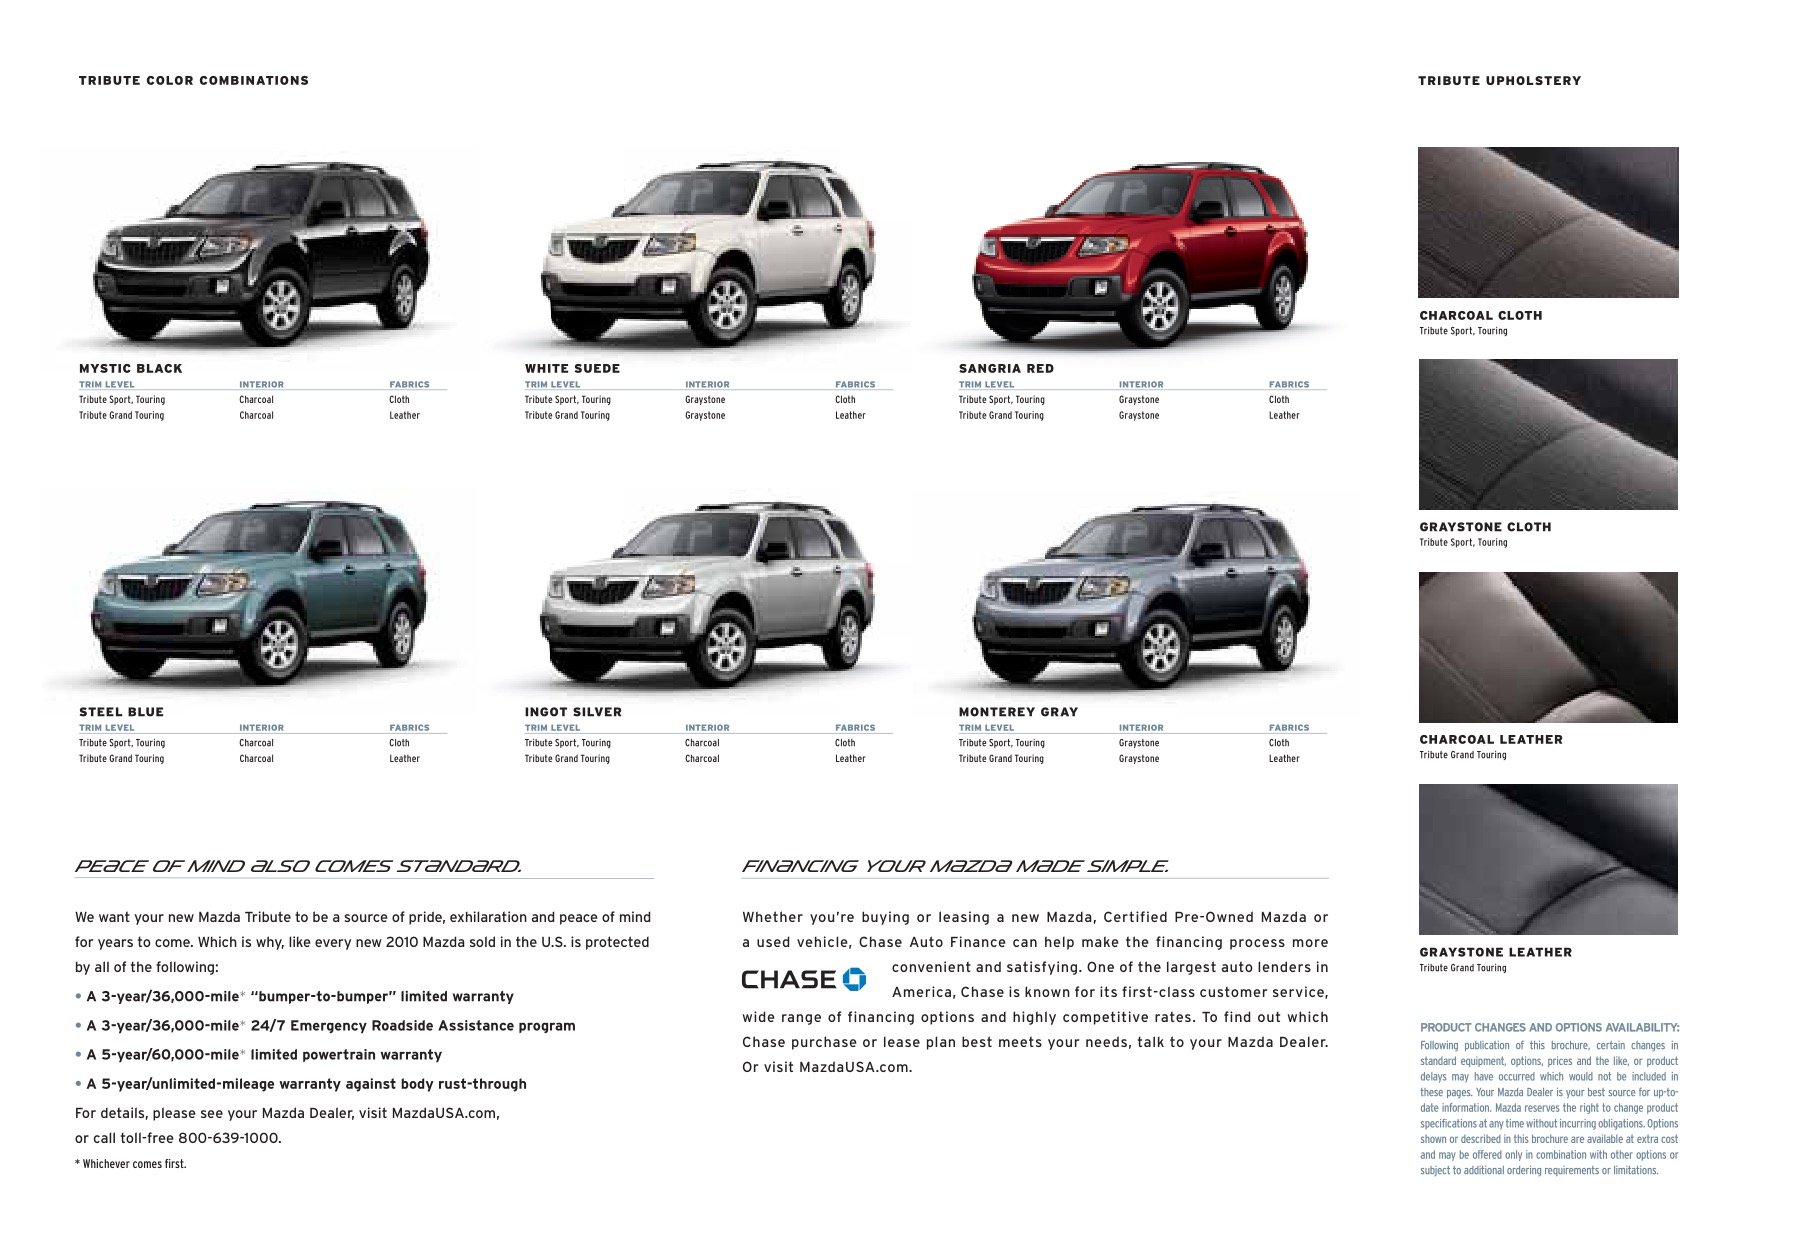 2010 Mazda Tribute Brochure Page 2